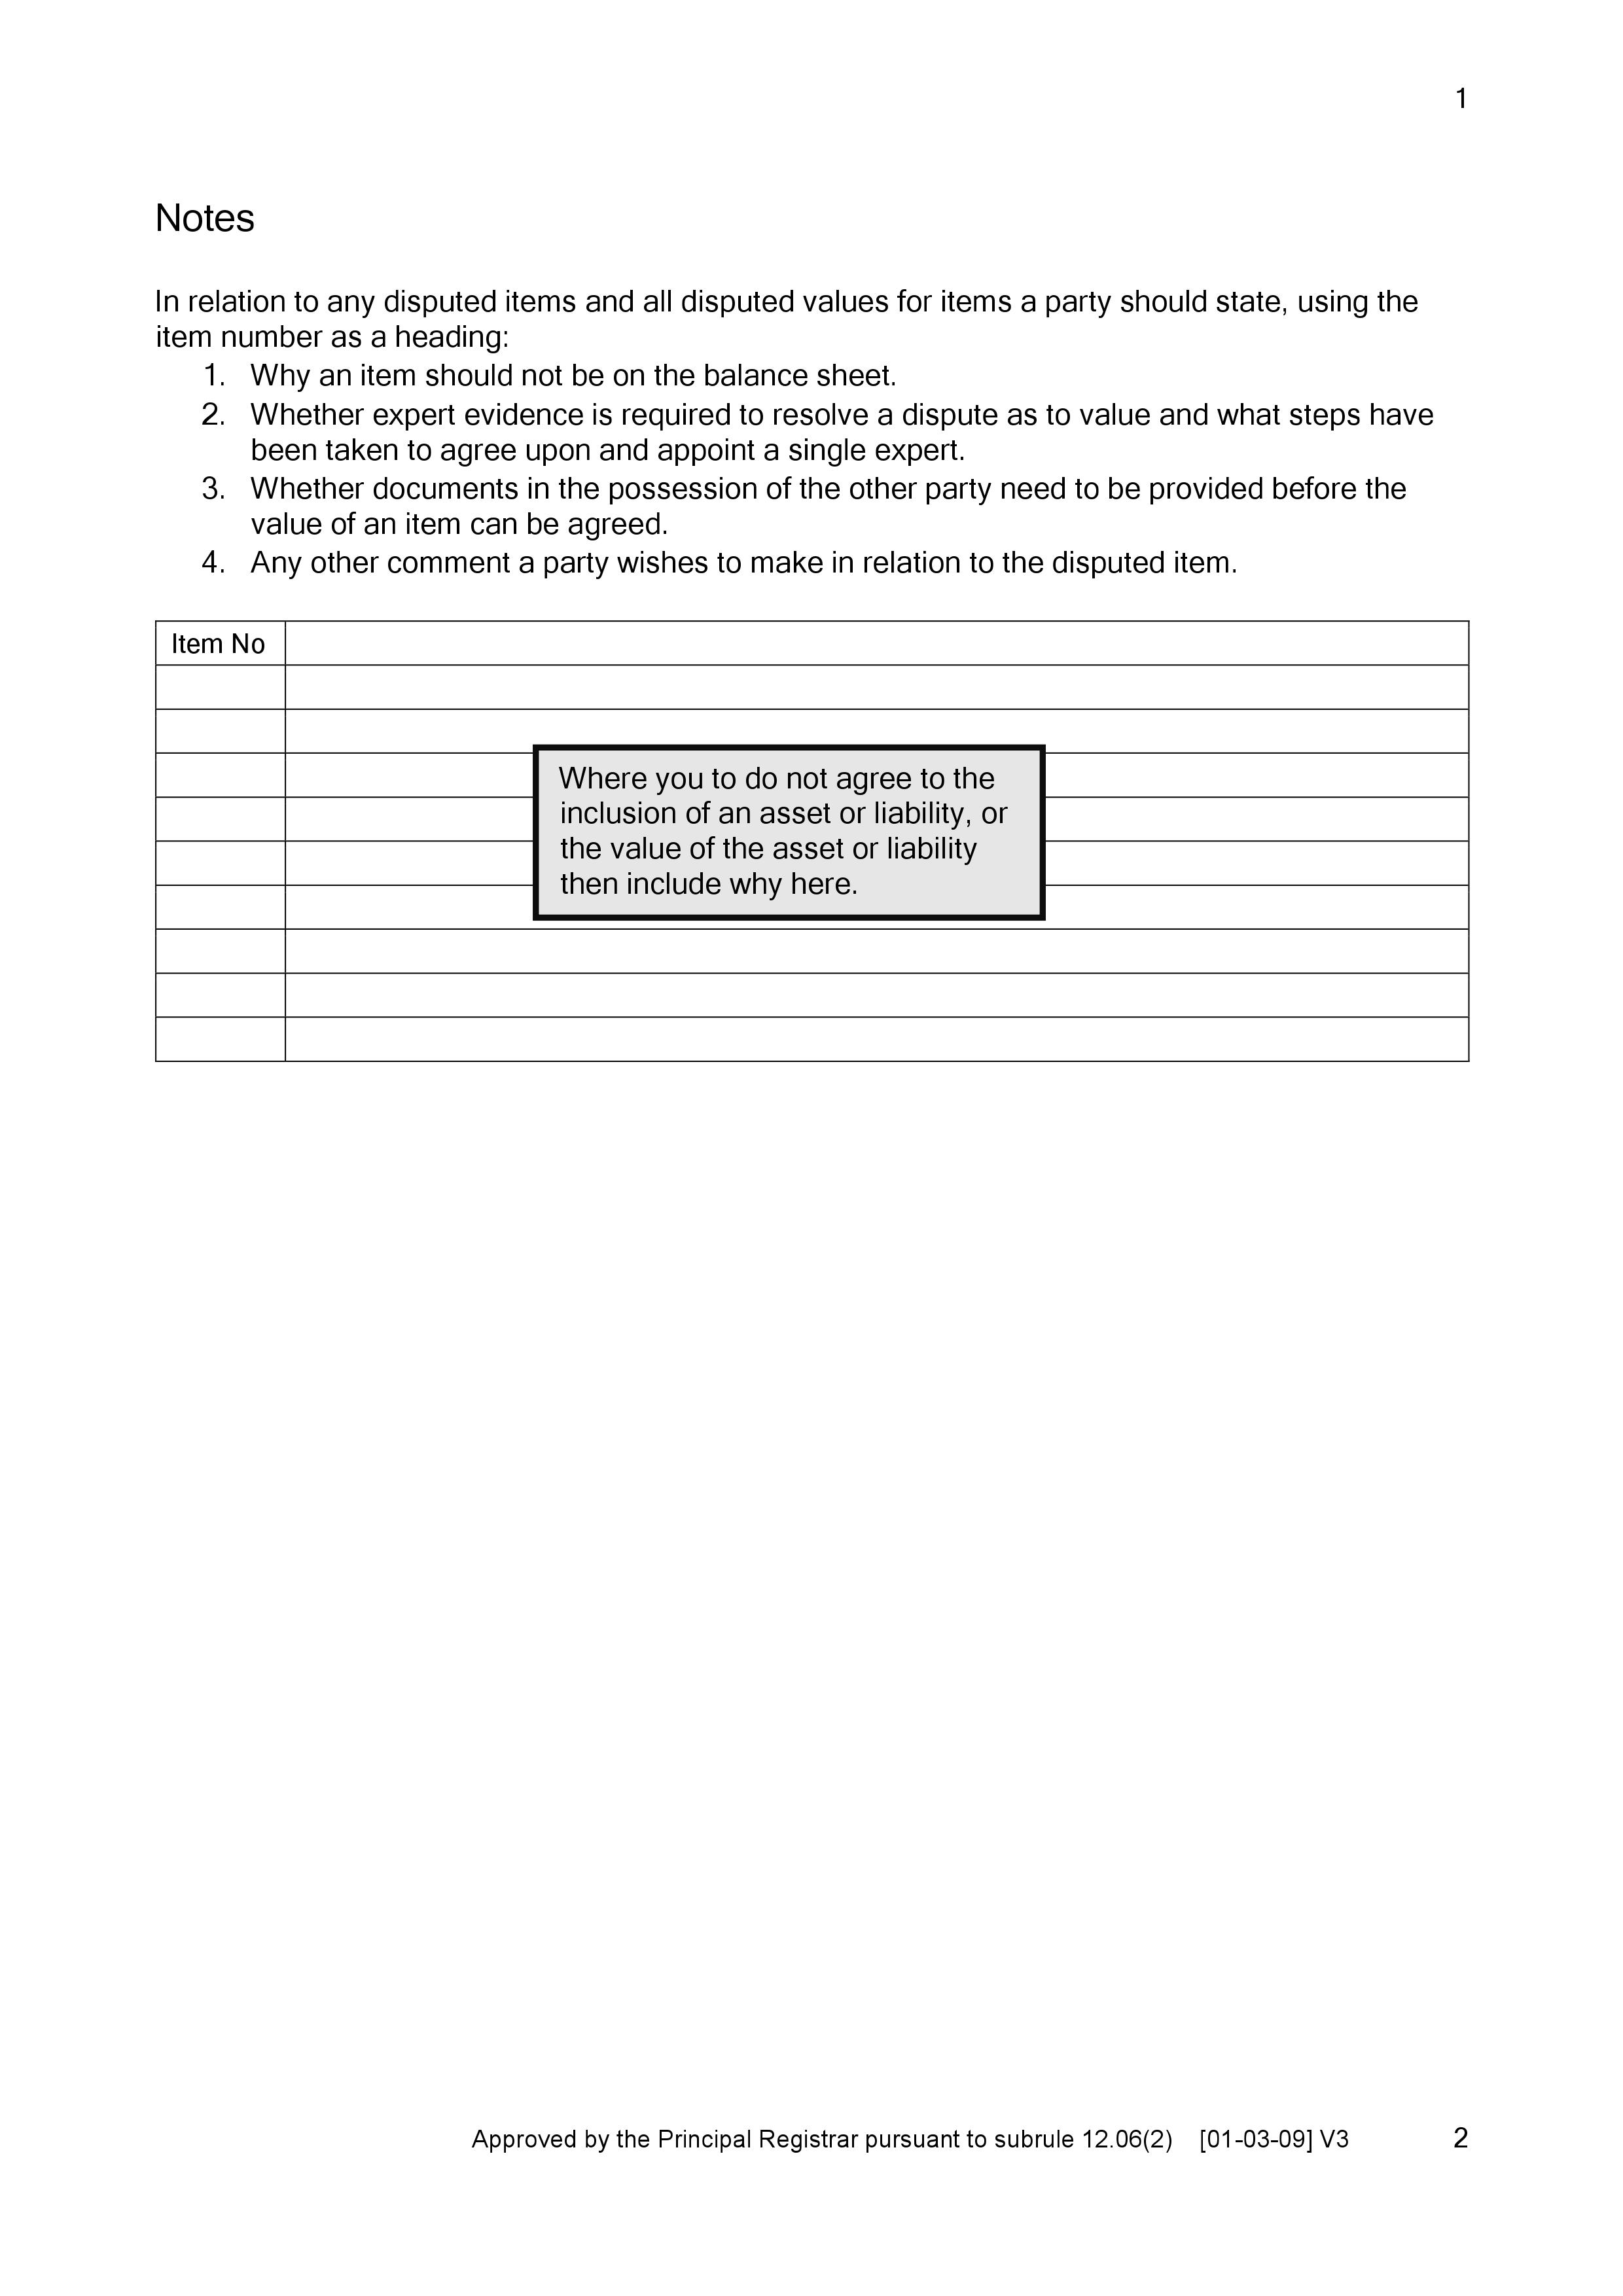 Balance Sheet pt 2